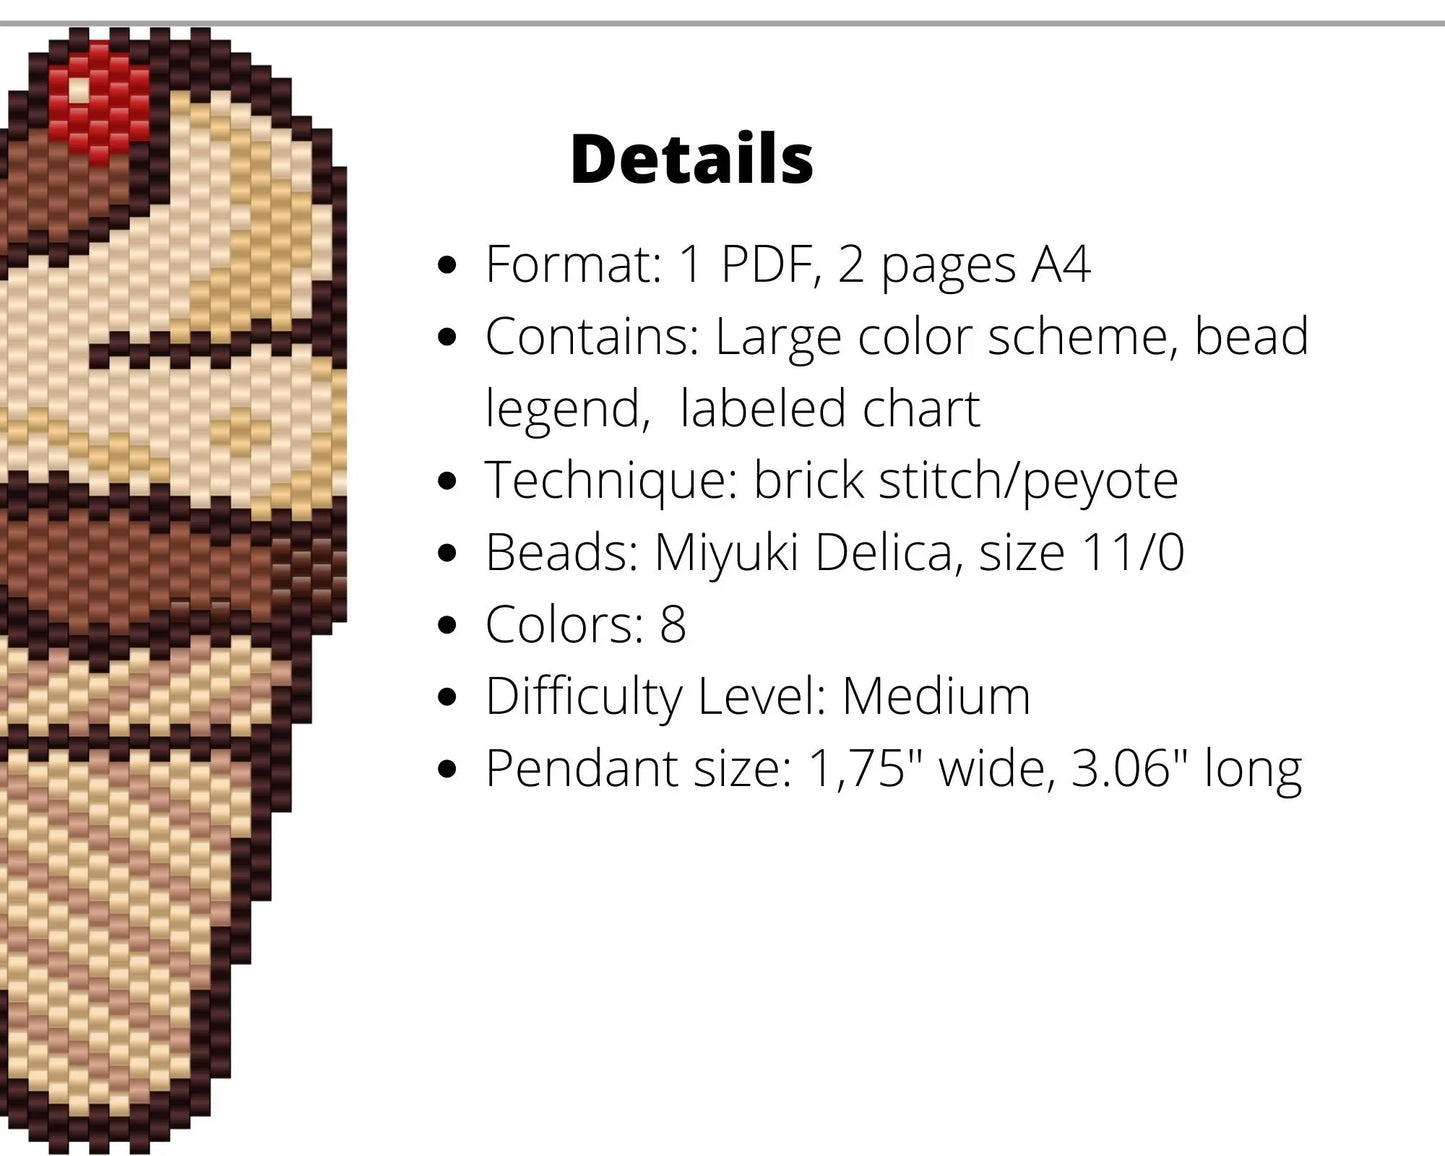 Peanut Ice Cream Brick Stitch pattern for beaded pendant and earrings NikoBeadsUA